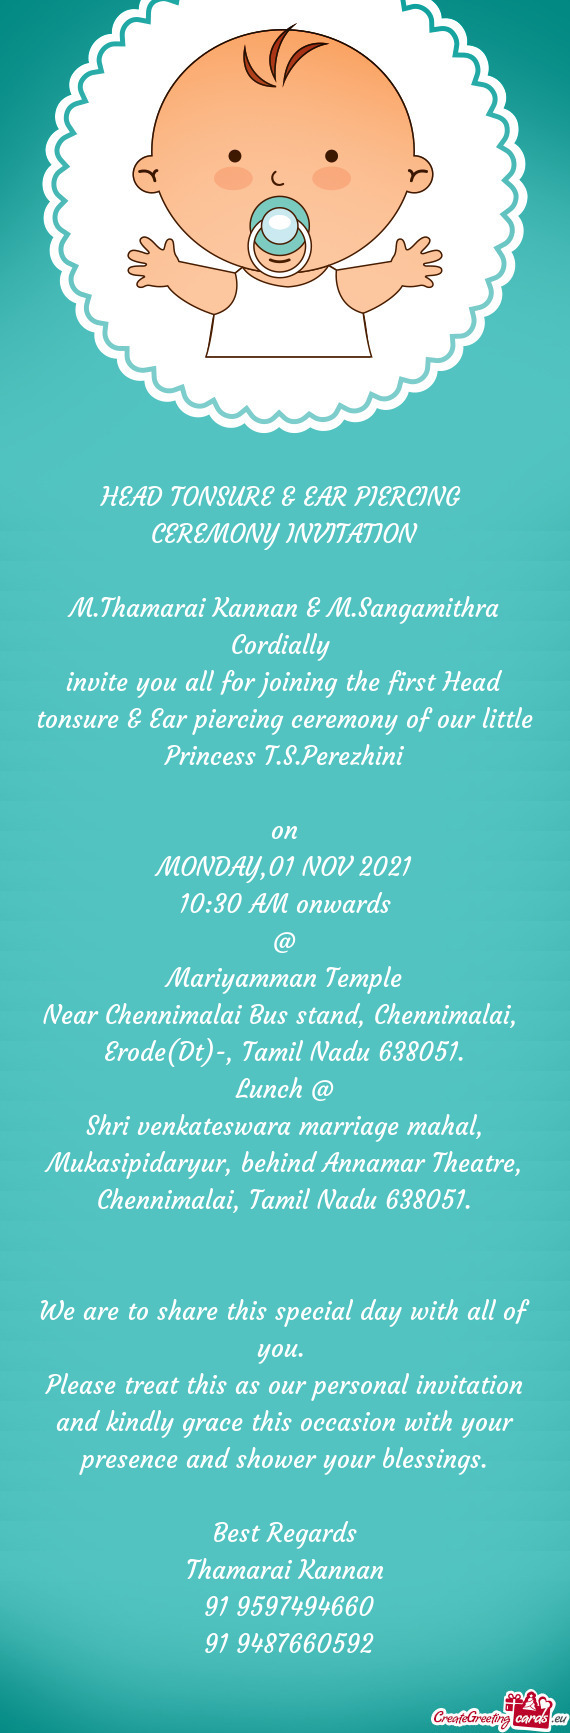 M.Thamarai Kannan & M.Sangamithra Cordially